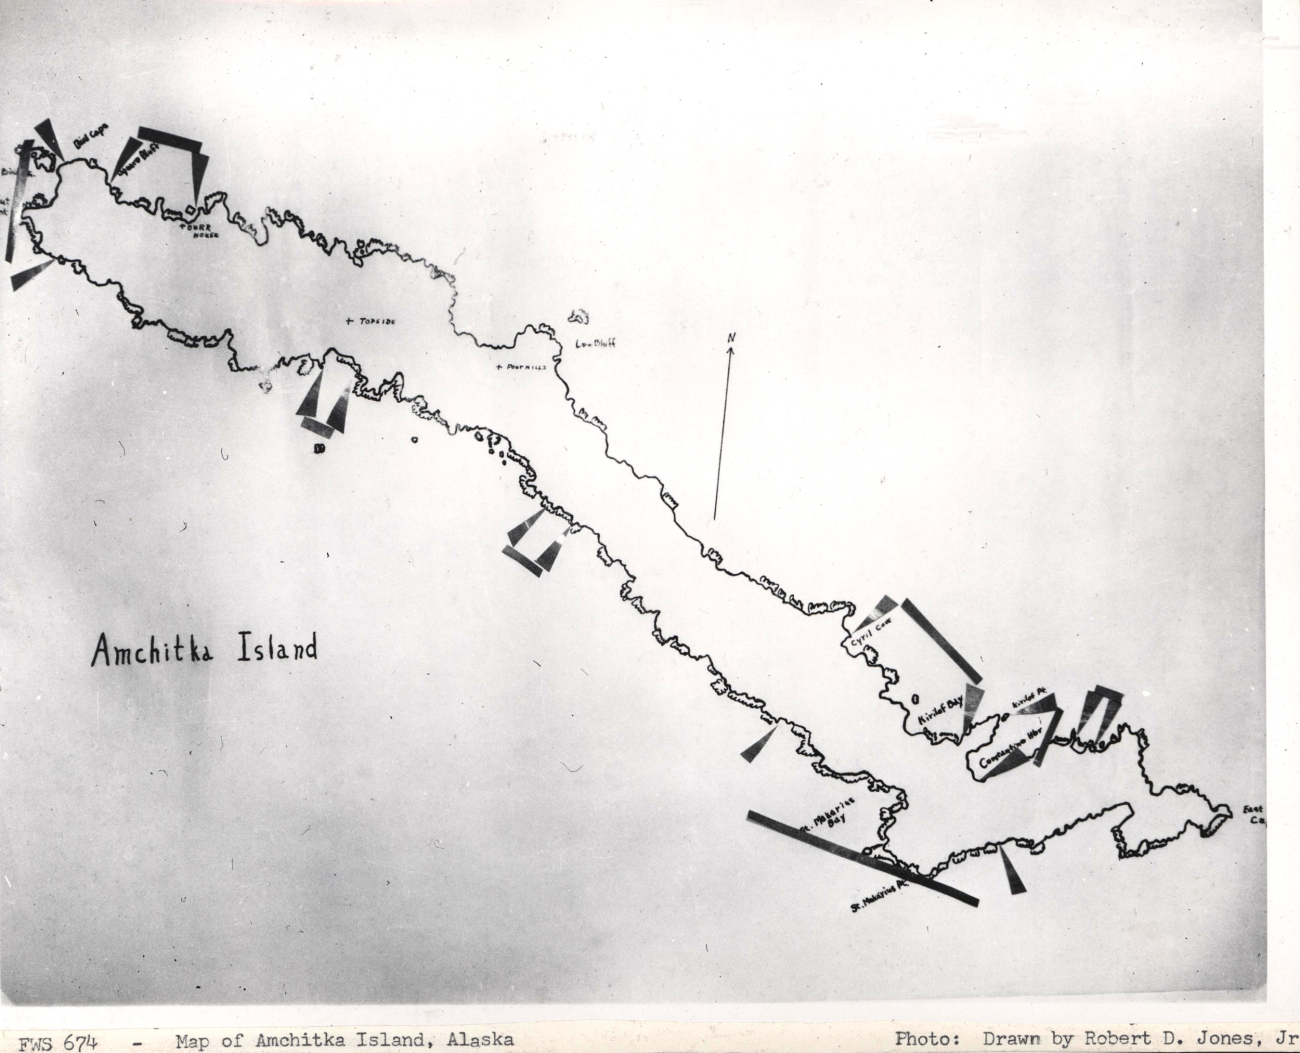 Class map of Amchitka Island drawn by Robert D